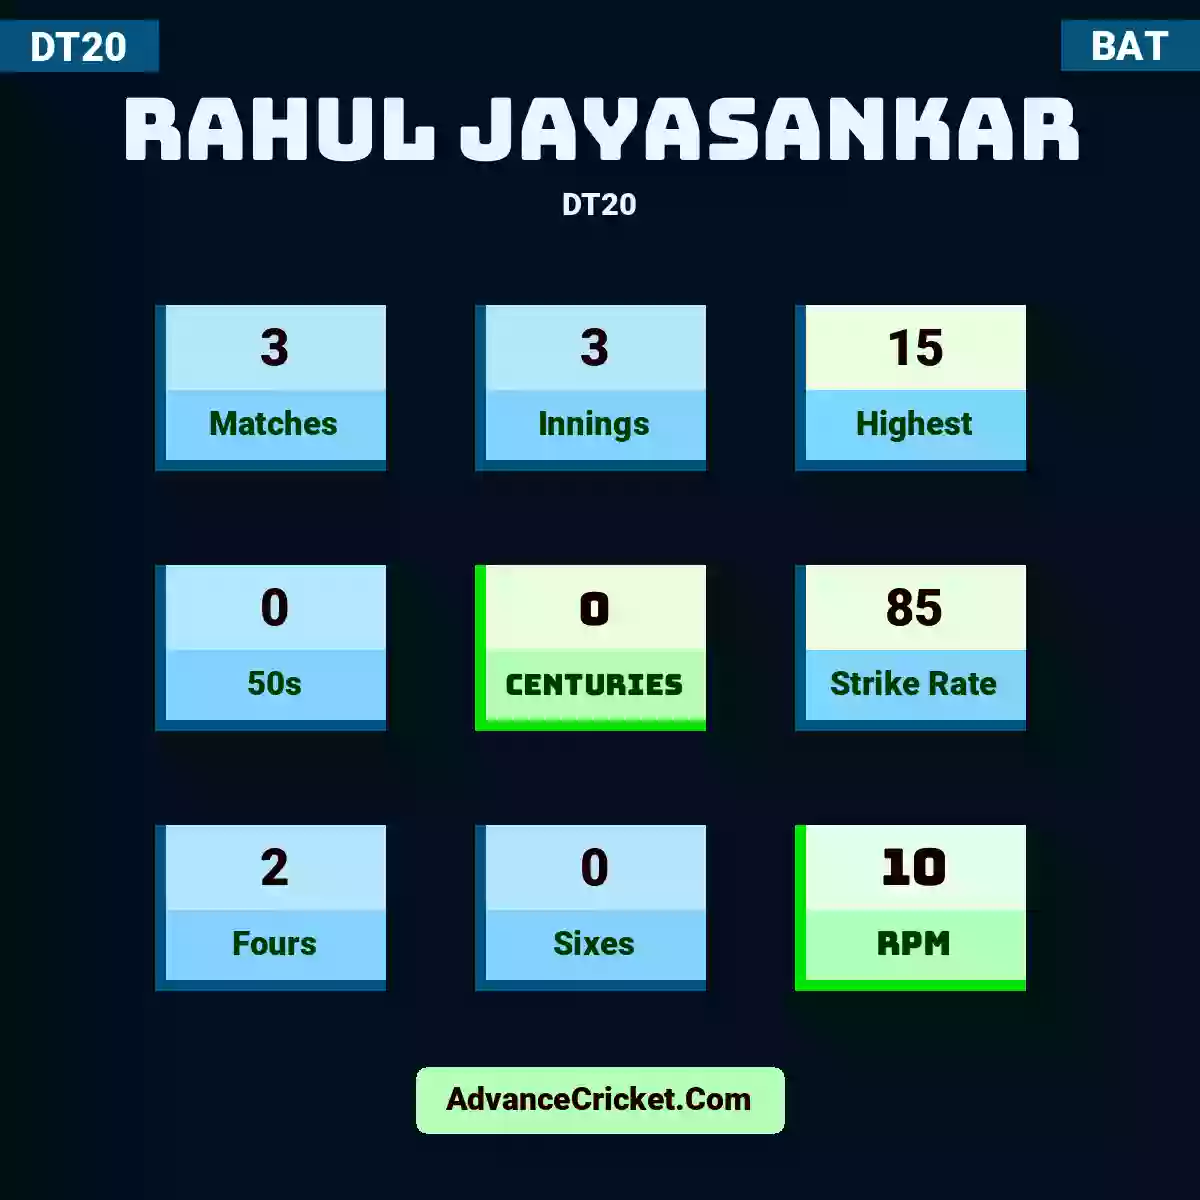 Rahul Jayasankar DT20 , Rahul Jayasankar played 3 matches, scored 15 runs as highest, 0 half-centuries, and 0 centuries, with a strike rate of 85. R.Jayasankar hit 2 fours and 0 sixes, with an RPM of 10.